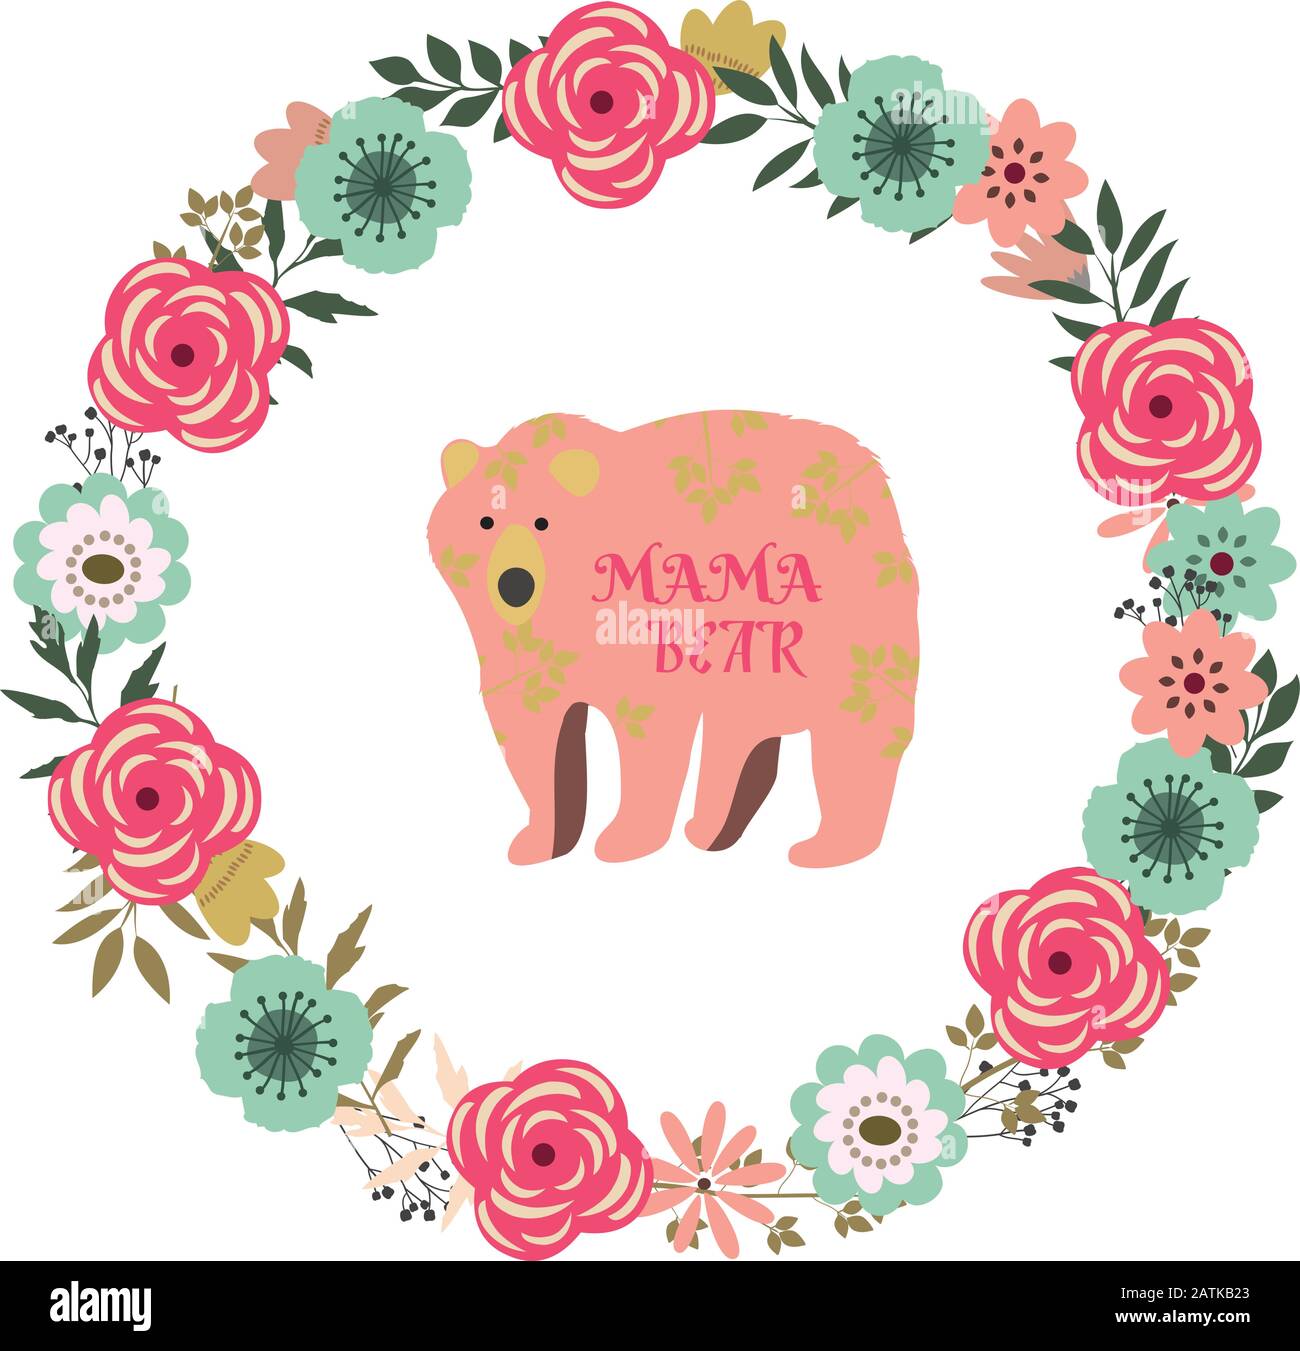 Mama Bear PNG Design Sunflower Arrows Instant Download  Etsy  Mama bear  Diy screen printing Design